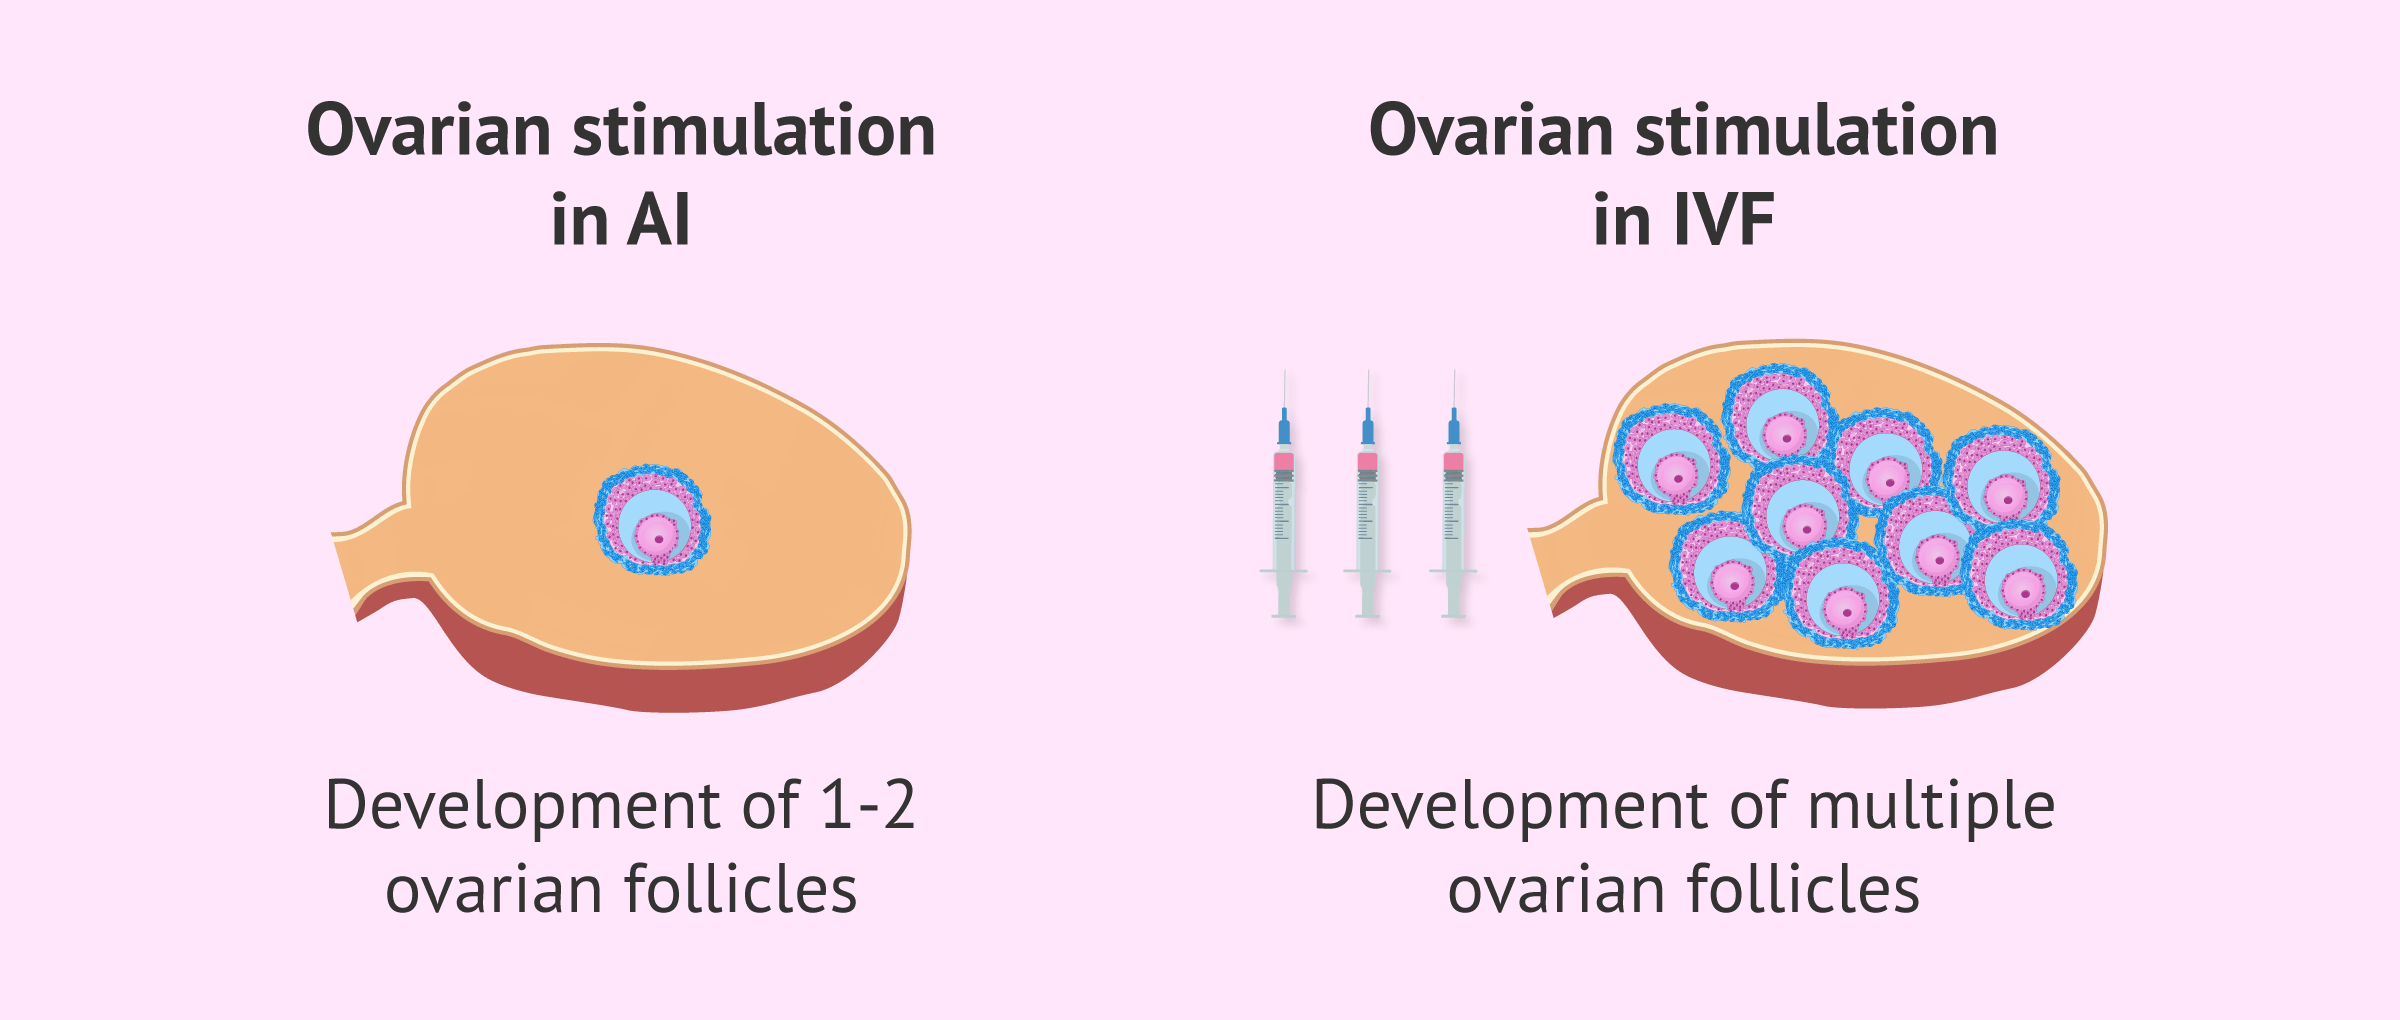 Follicular development in ovarian stimulation for AI and IVF